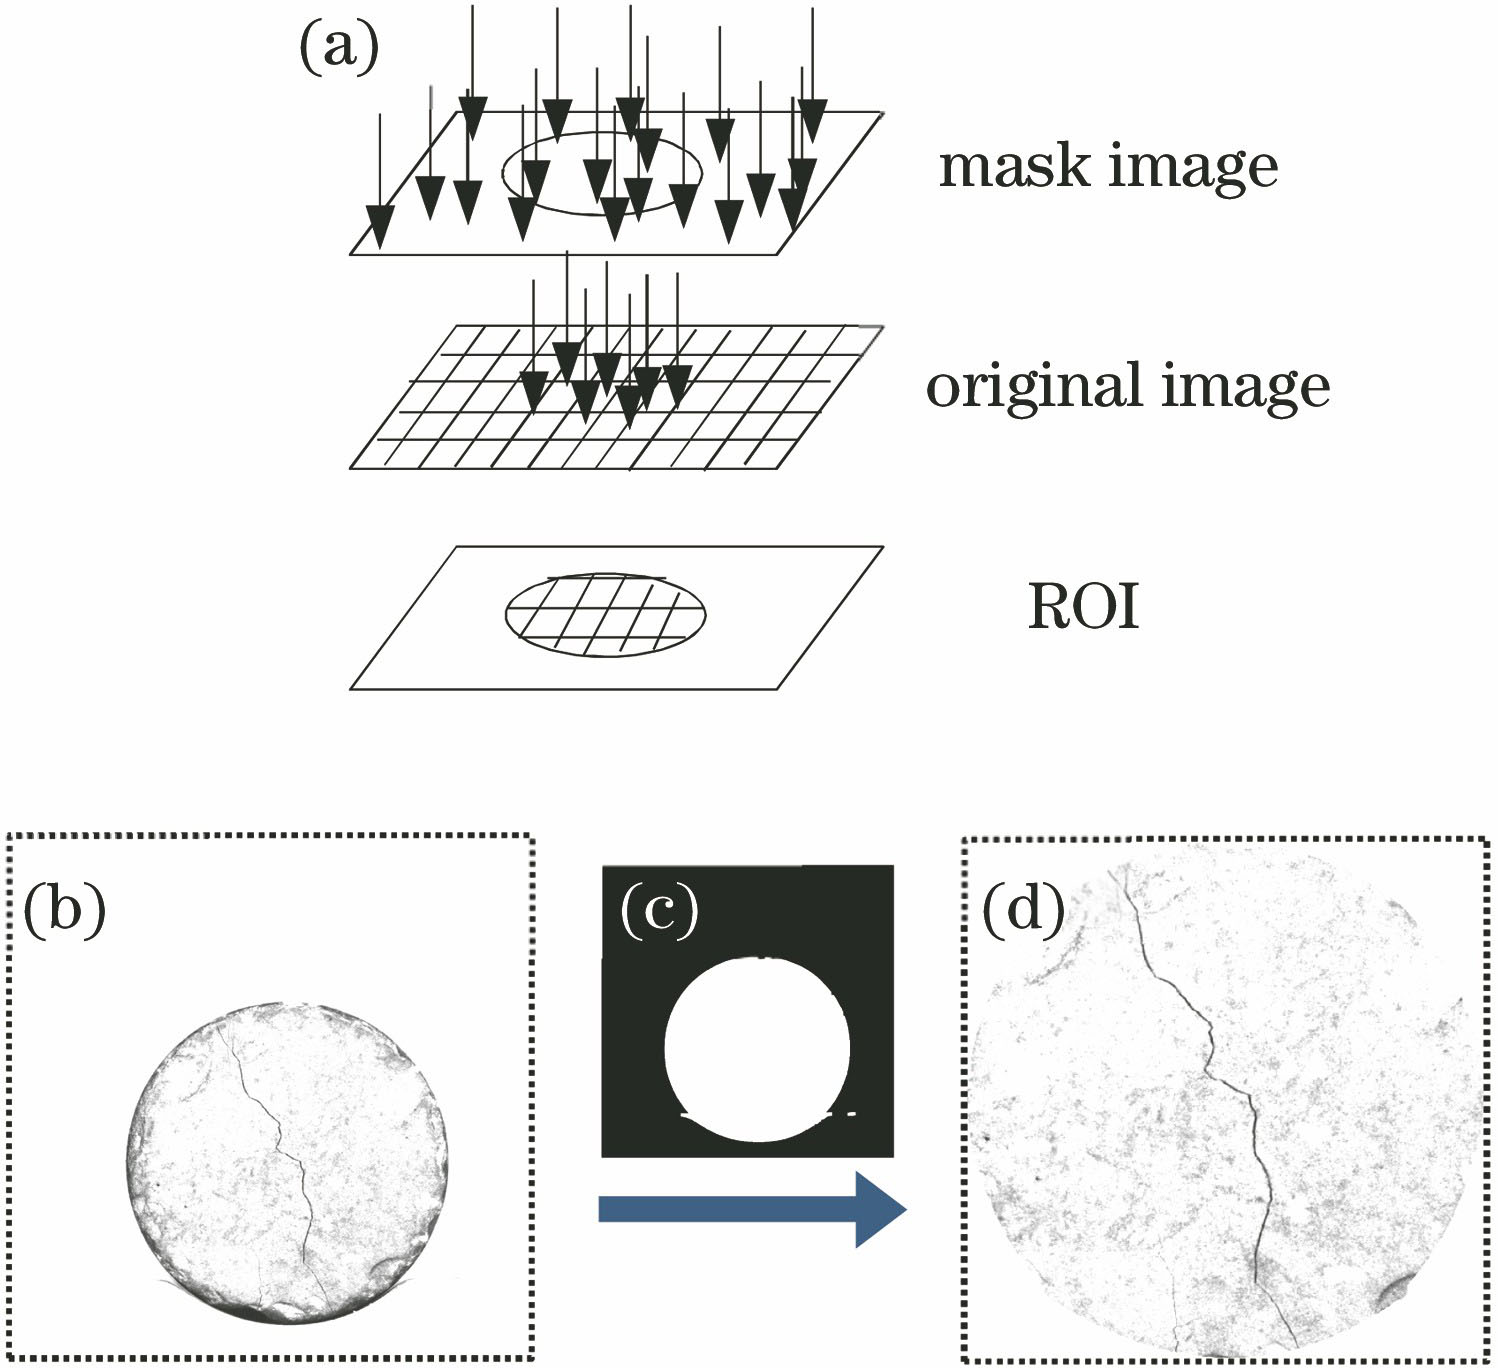 Acquisition of the ROI image. (a) Mask process schematic; (b) original image; (c) mask image; (d) ROI image